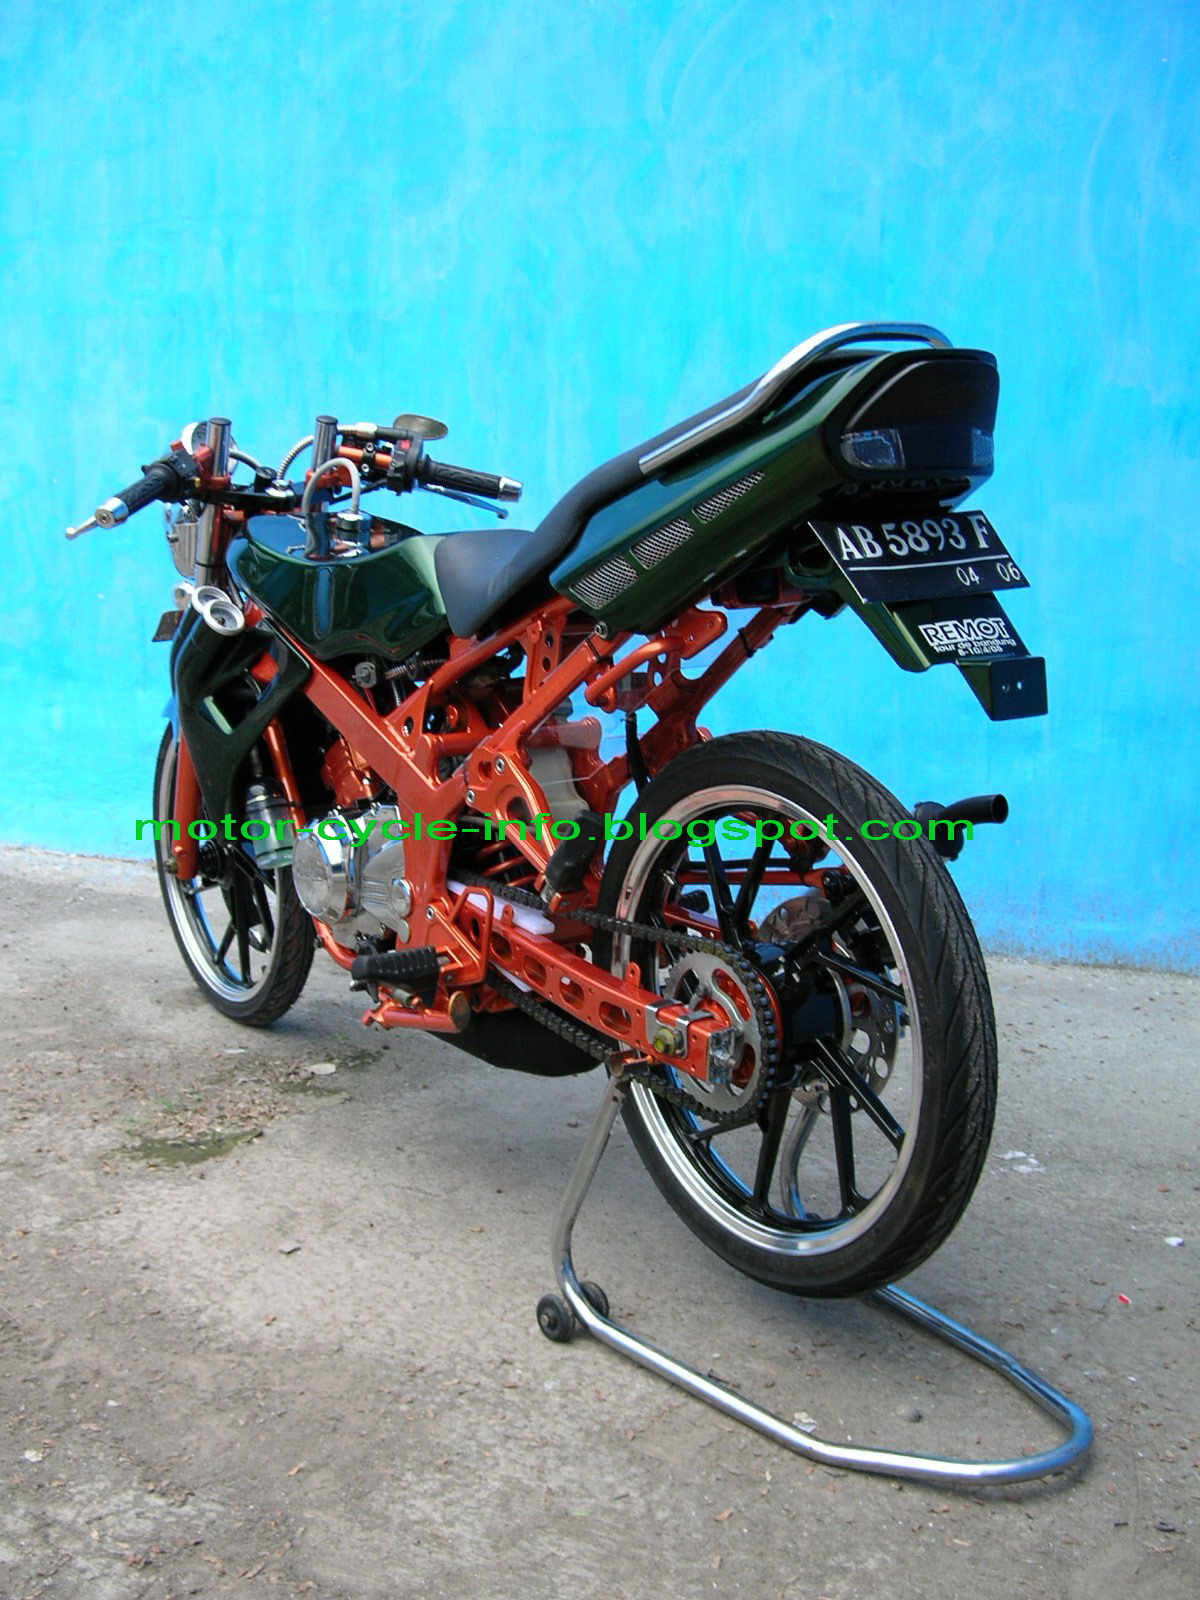 Picture of Modif Motor Ninja